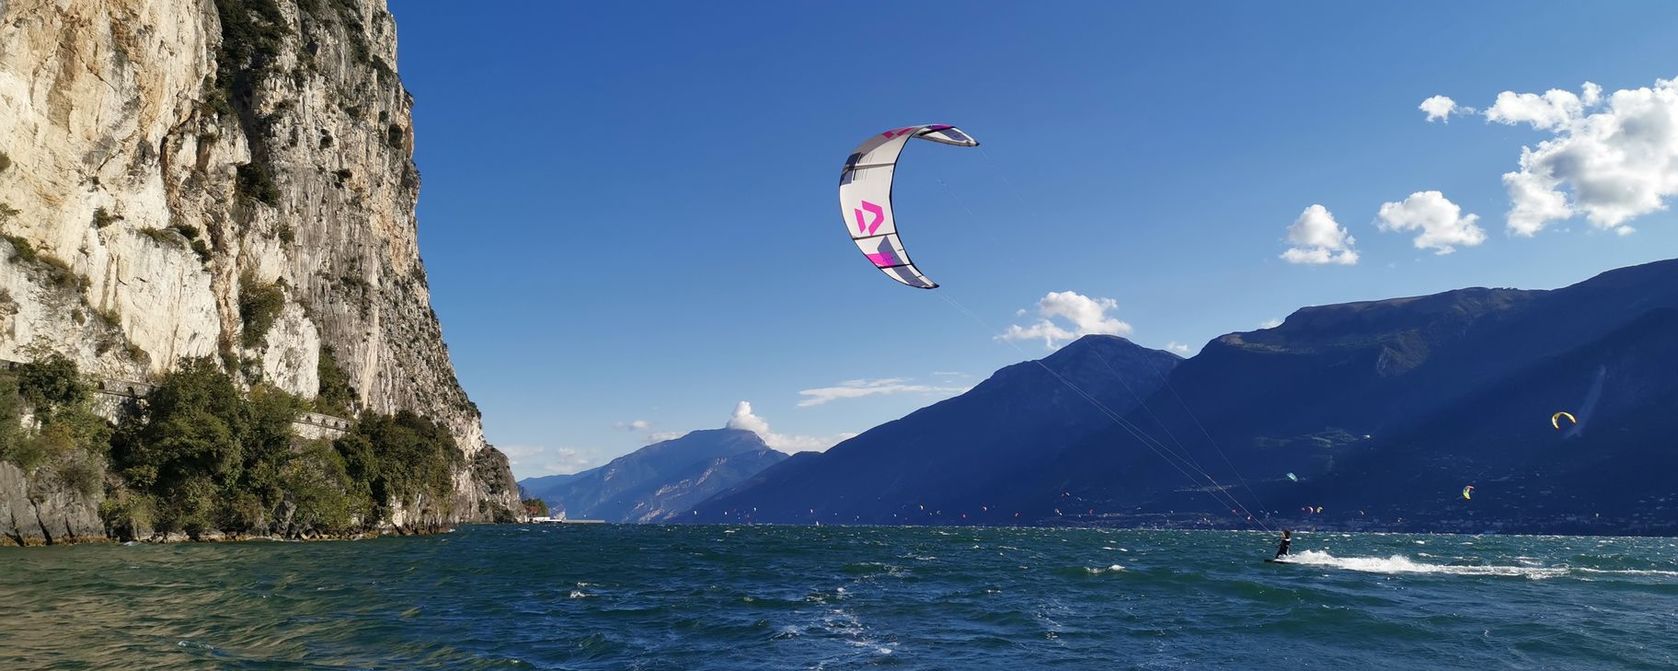 Kiteschule am Gardasee